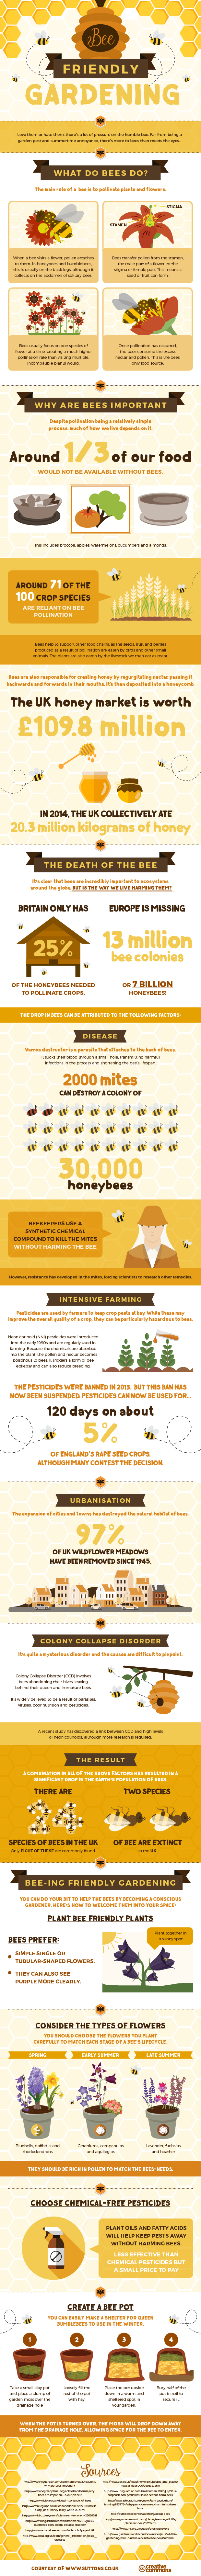 bee friendly gardening Infographic